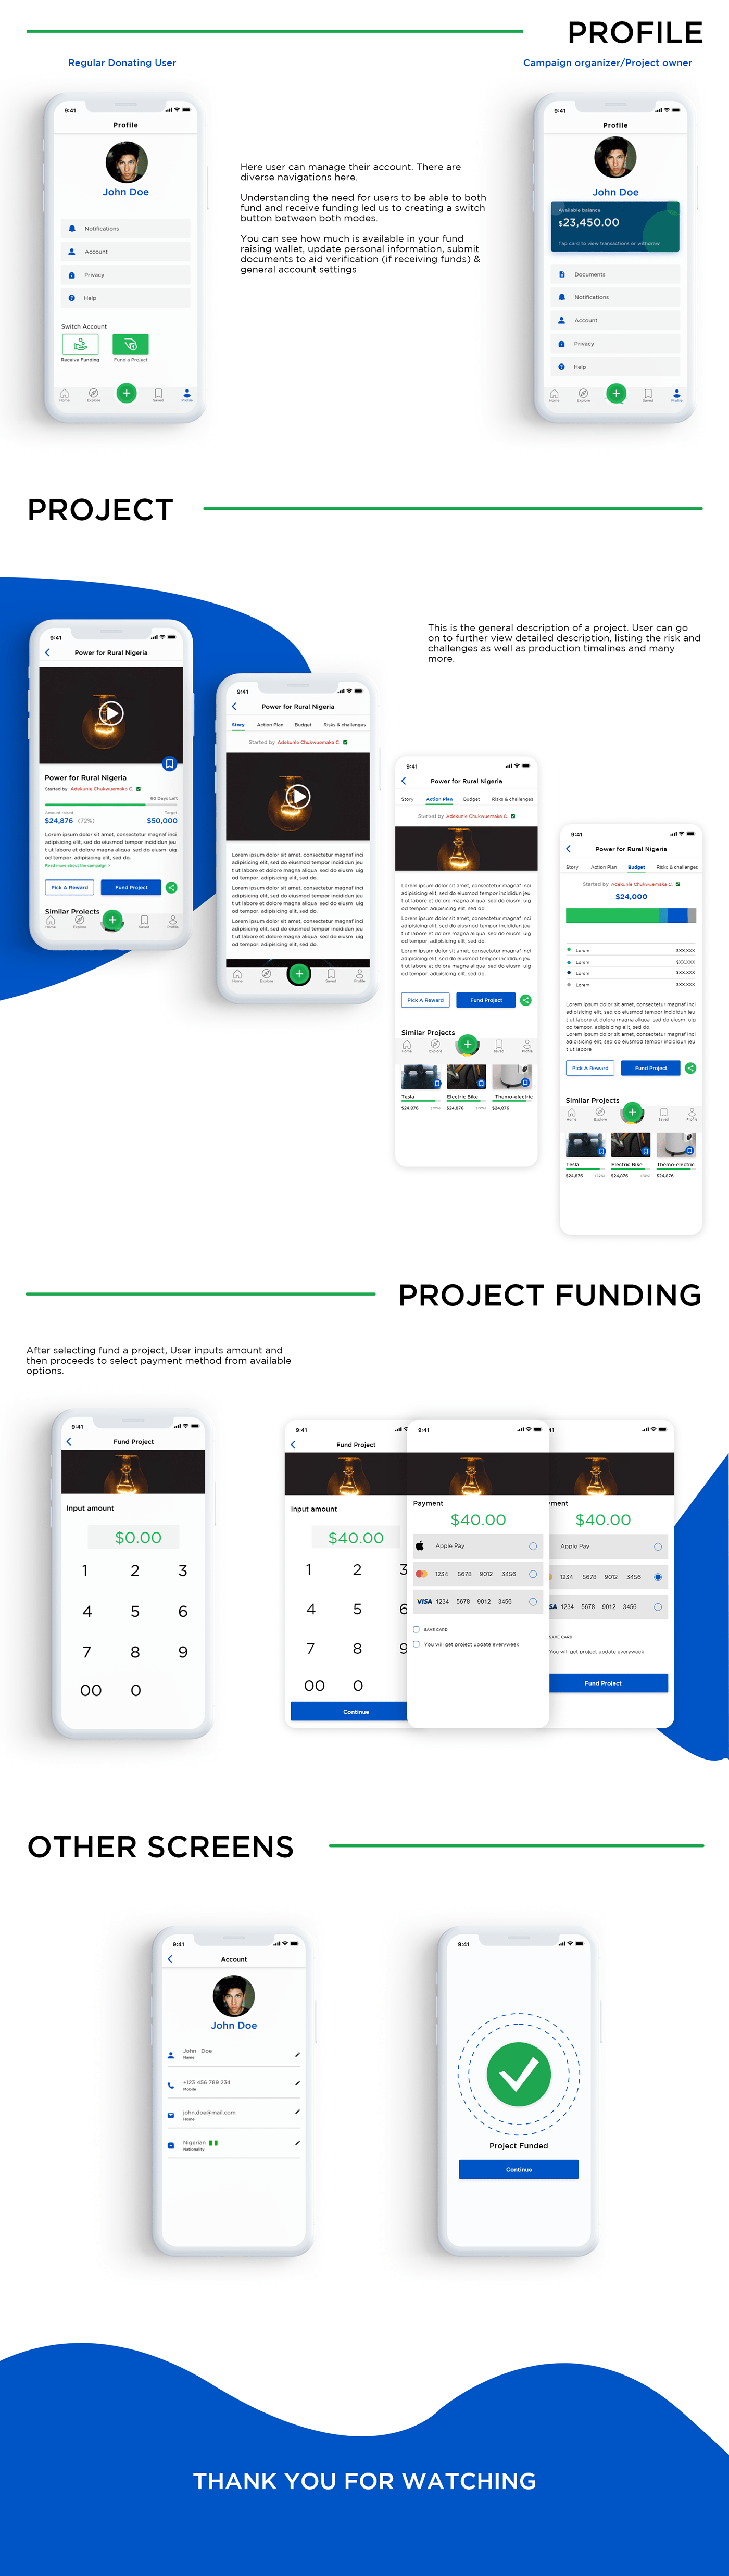 crowdfunder crowdfunding donating platform fundraiser fundraising gofundme innovation Kickstarter crowdfunding app Fundraising app